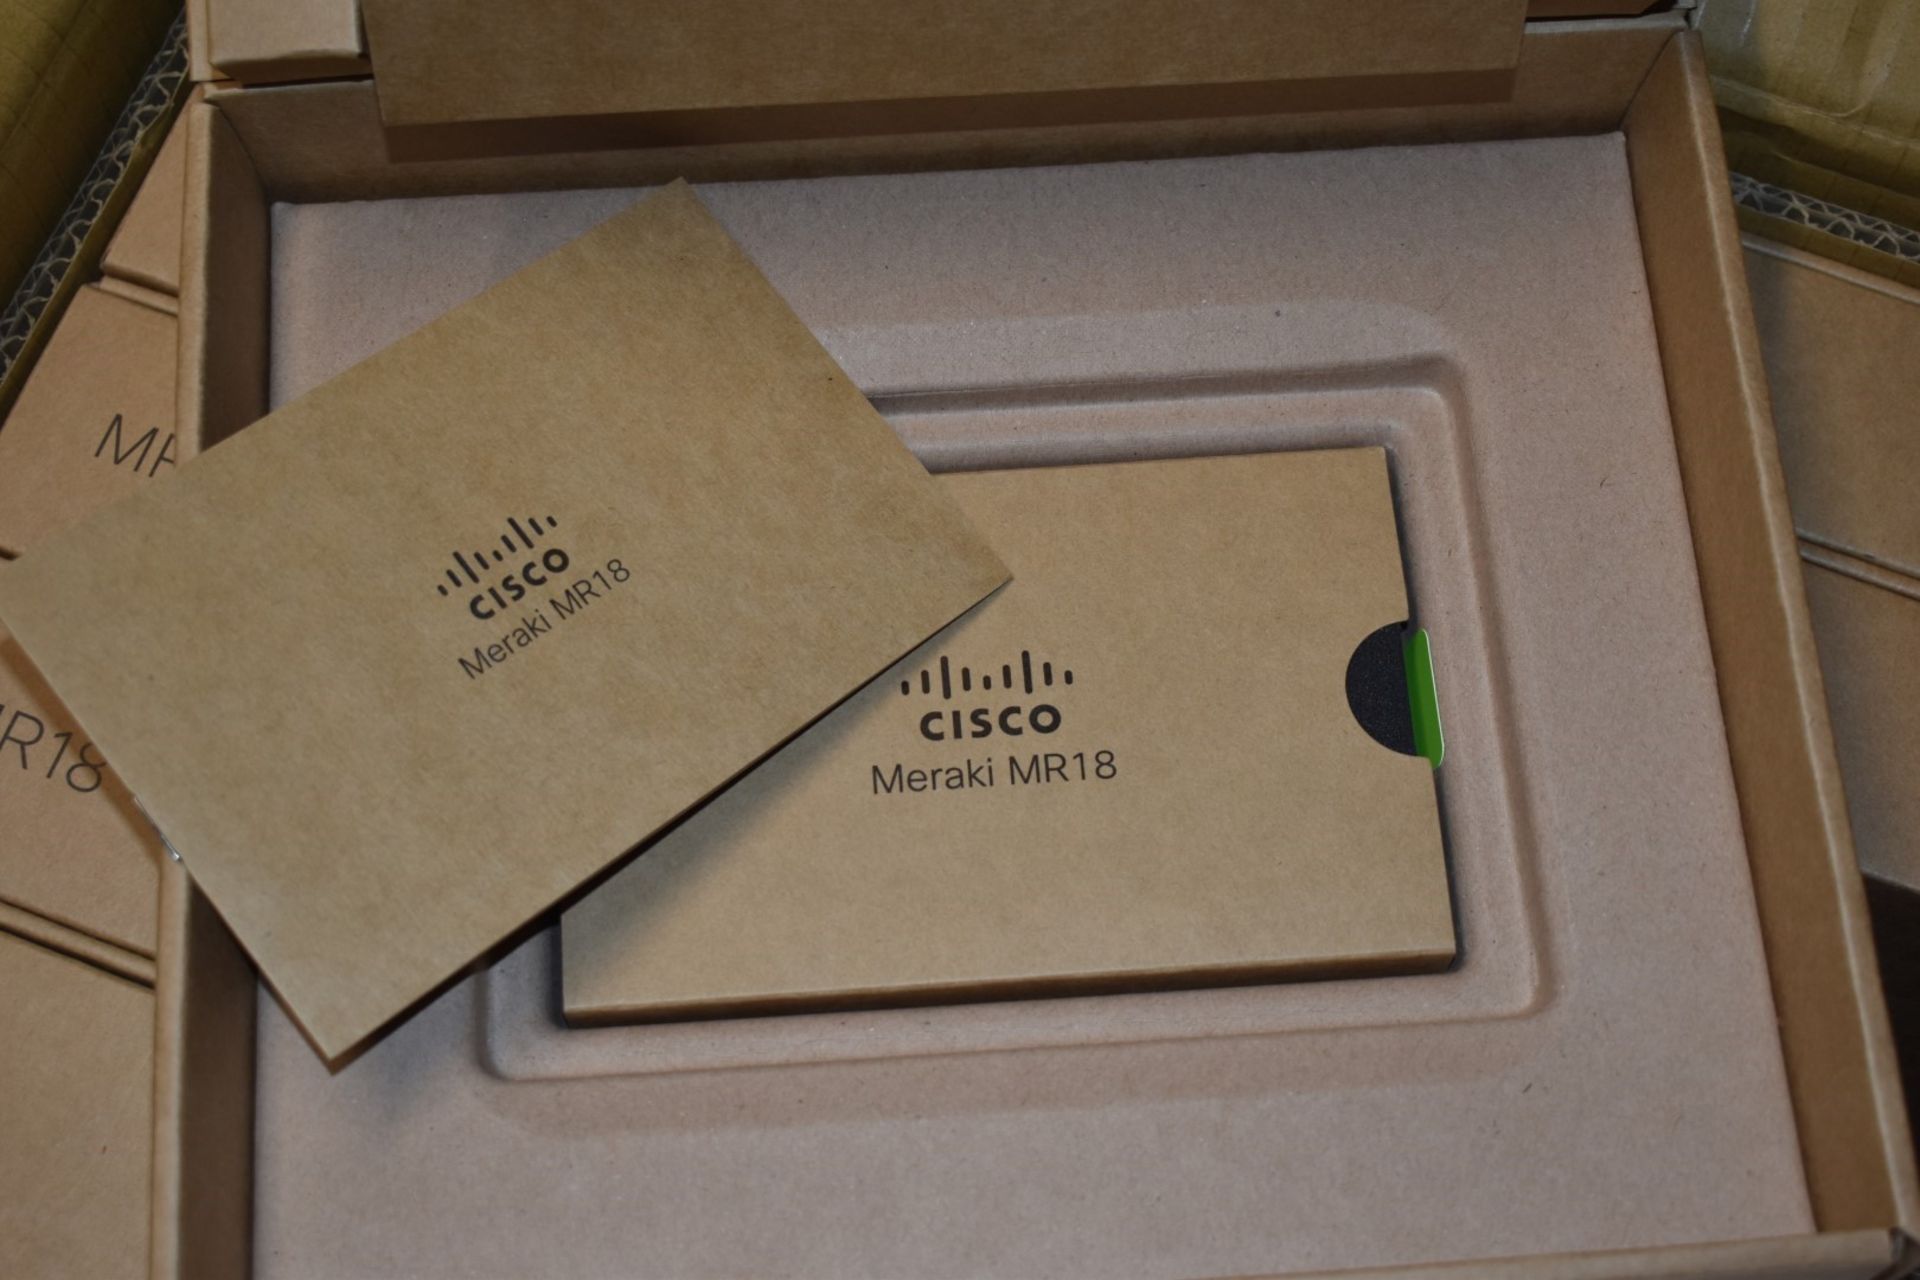 10 x Cisco Meraki MR18 DualBand CloudManaged Wireless Network Access Points Brand New - Image 3 of 4